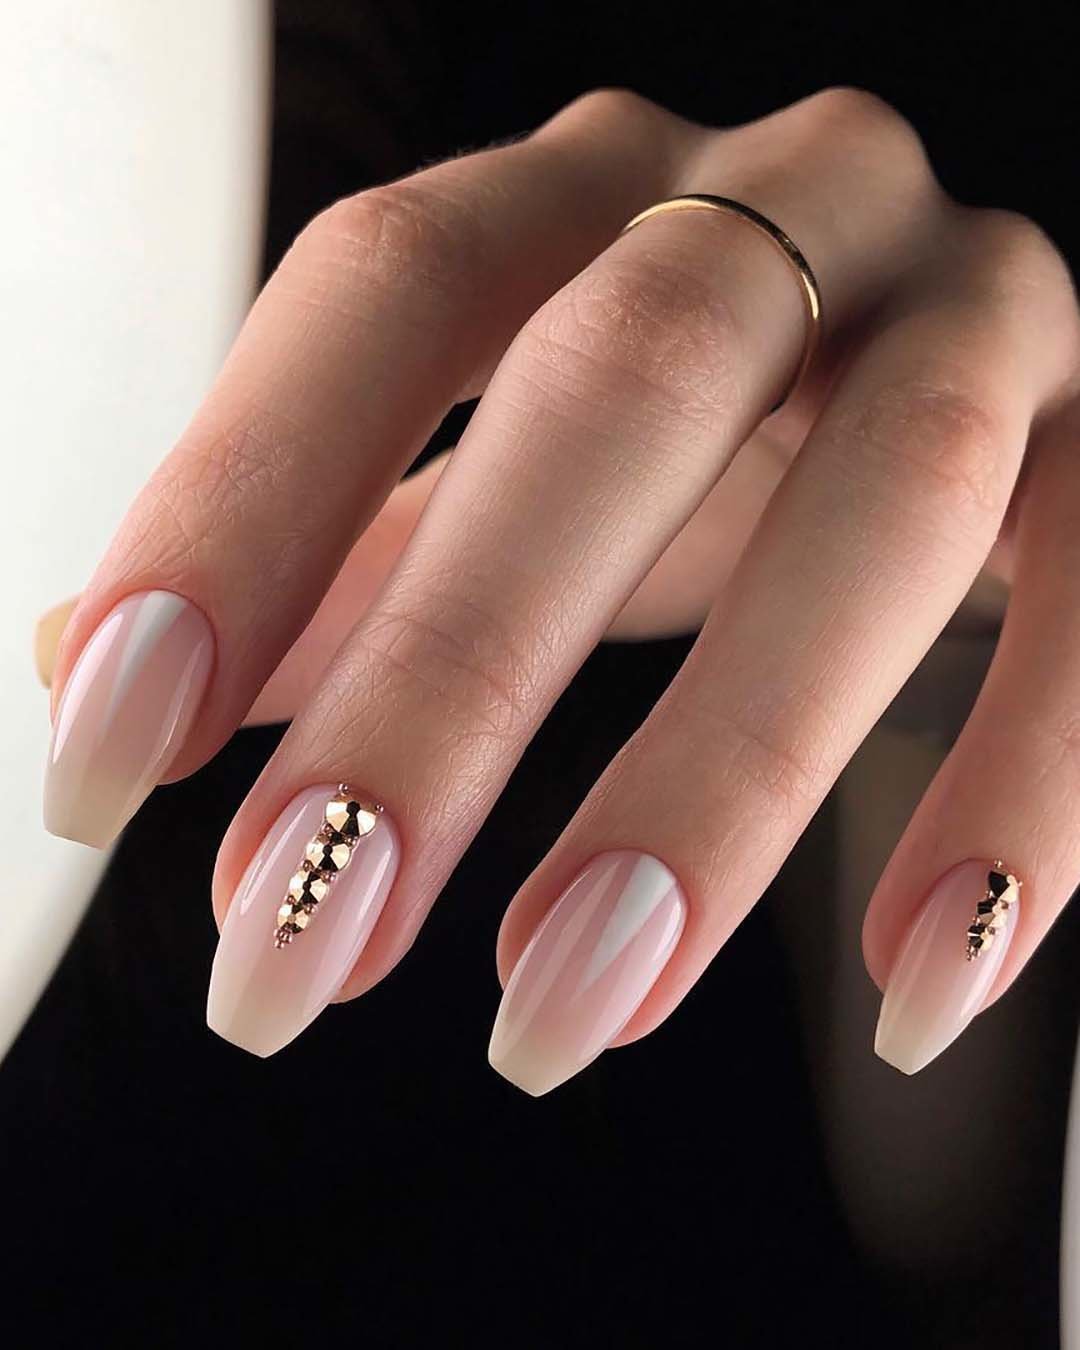 pinterest nails wedding pink with gold rhinestones mariapro.nails